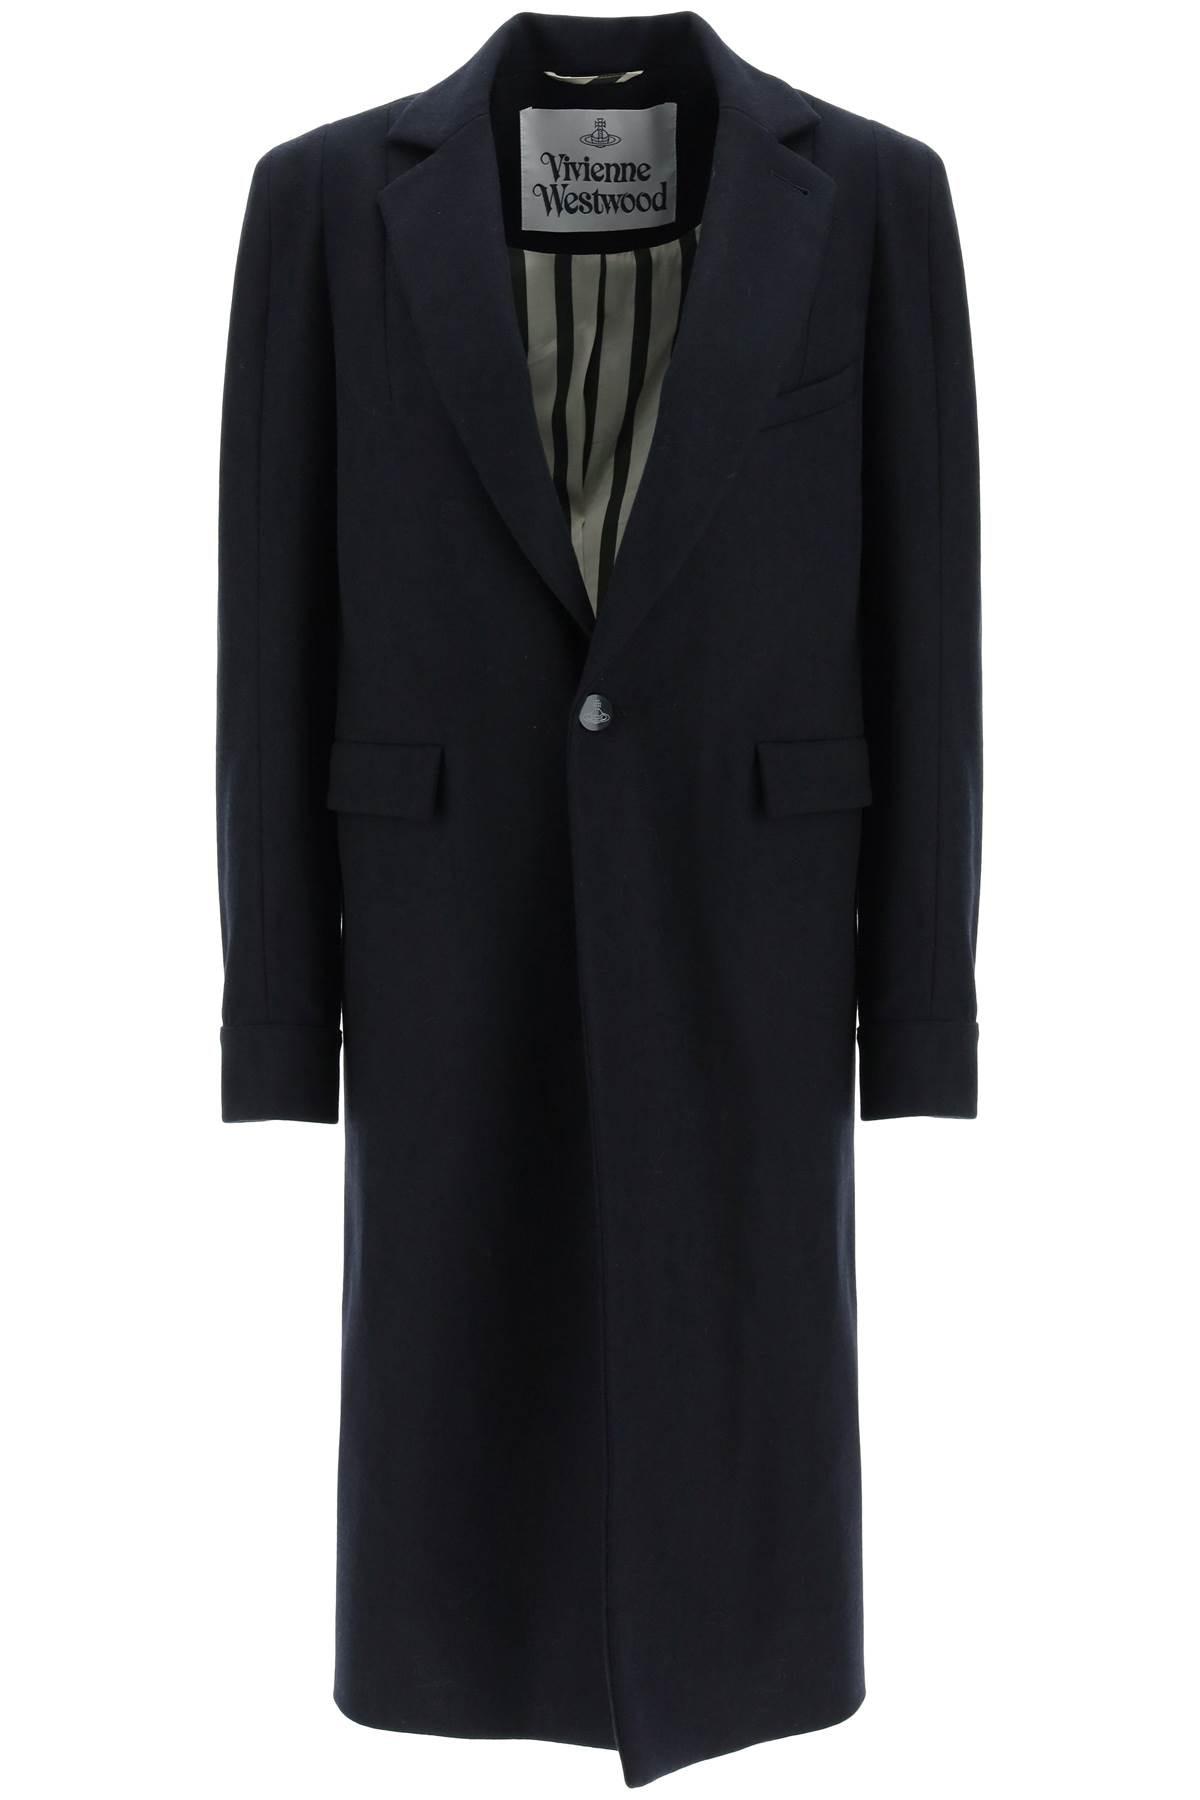 Vivienne Westwood Alien Teddy Long Coat in Black | Lyst UK